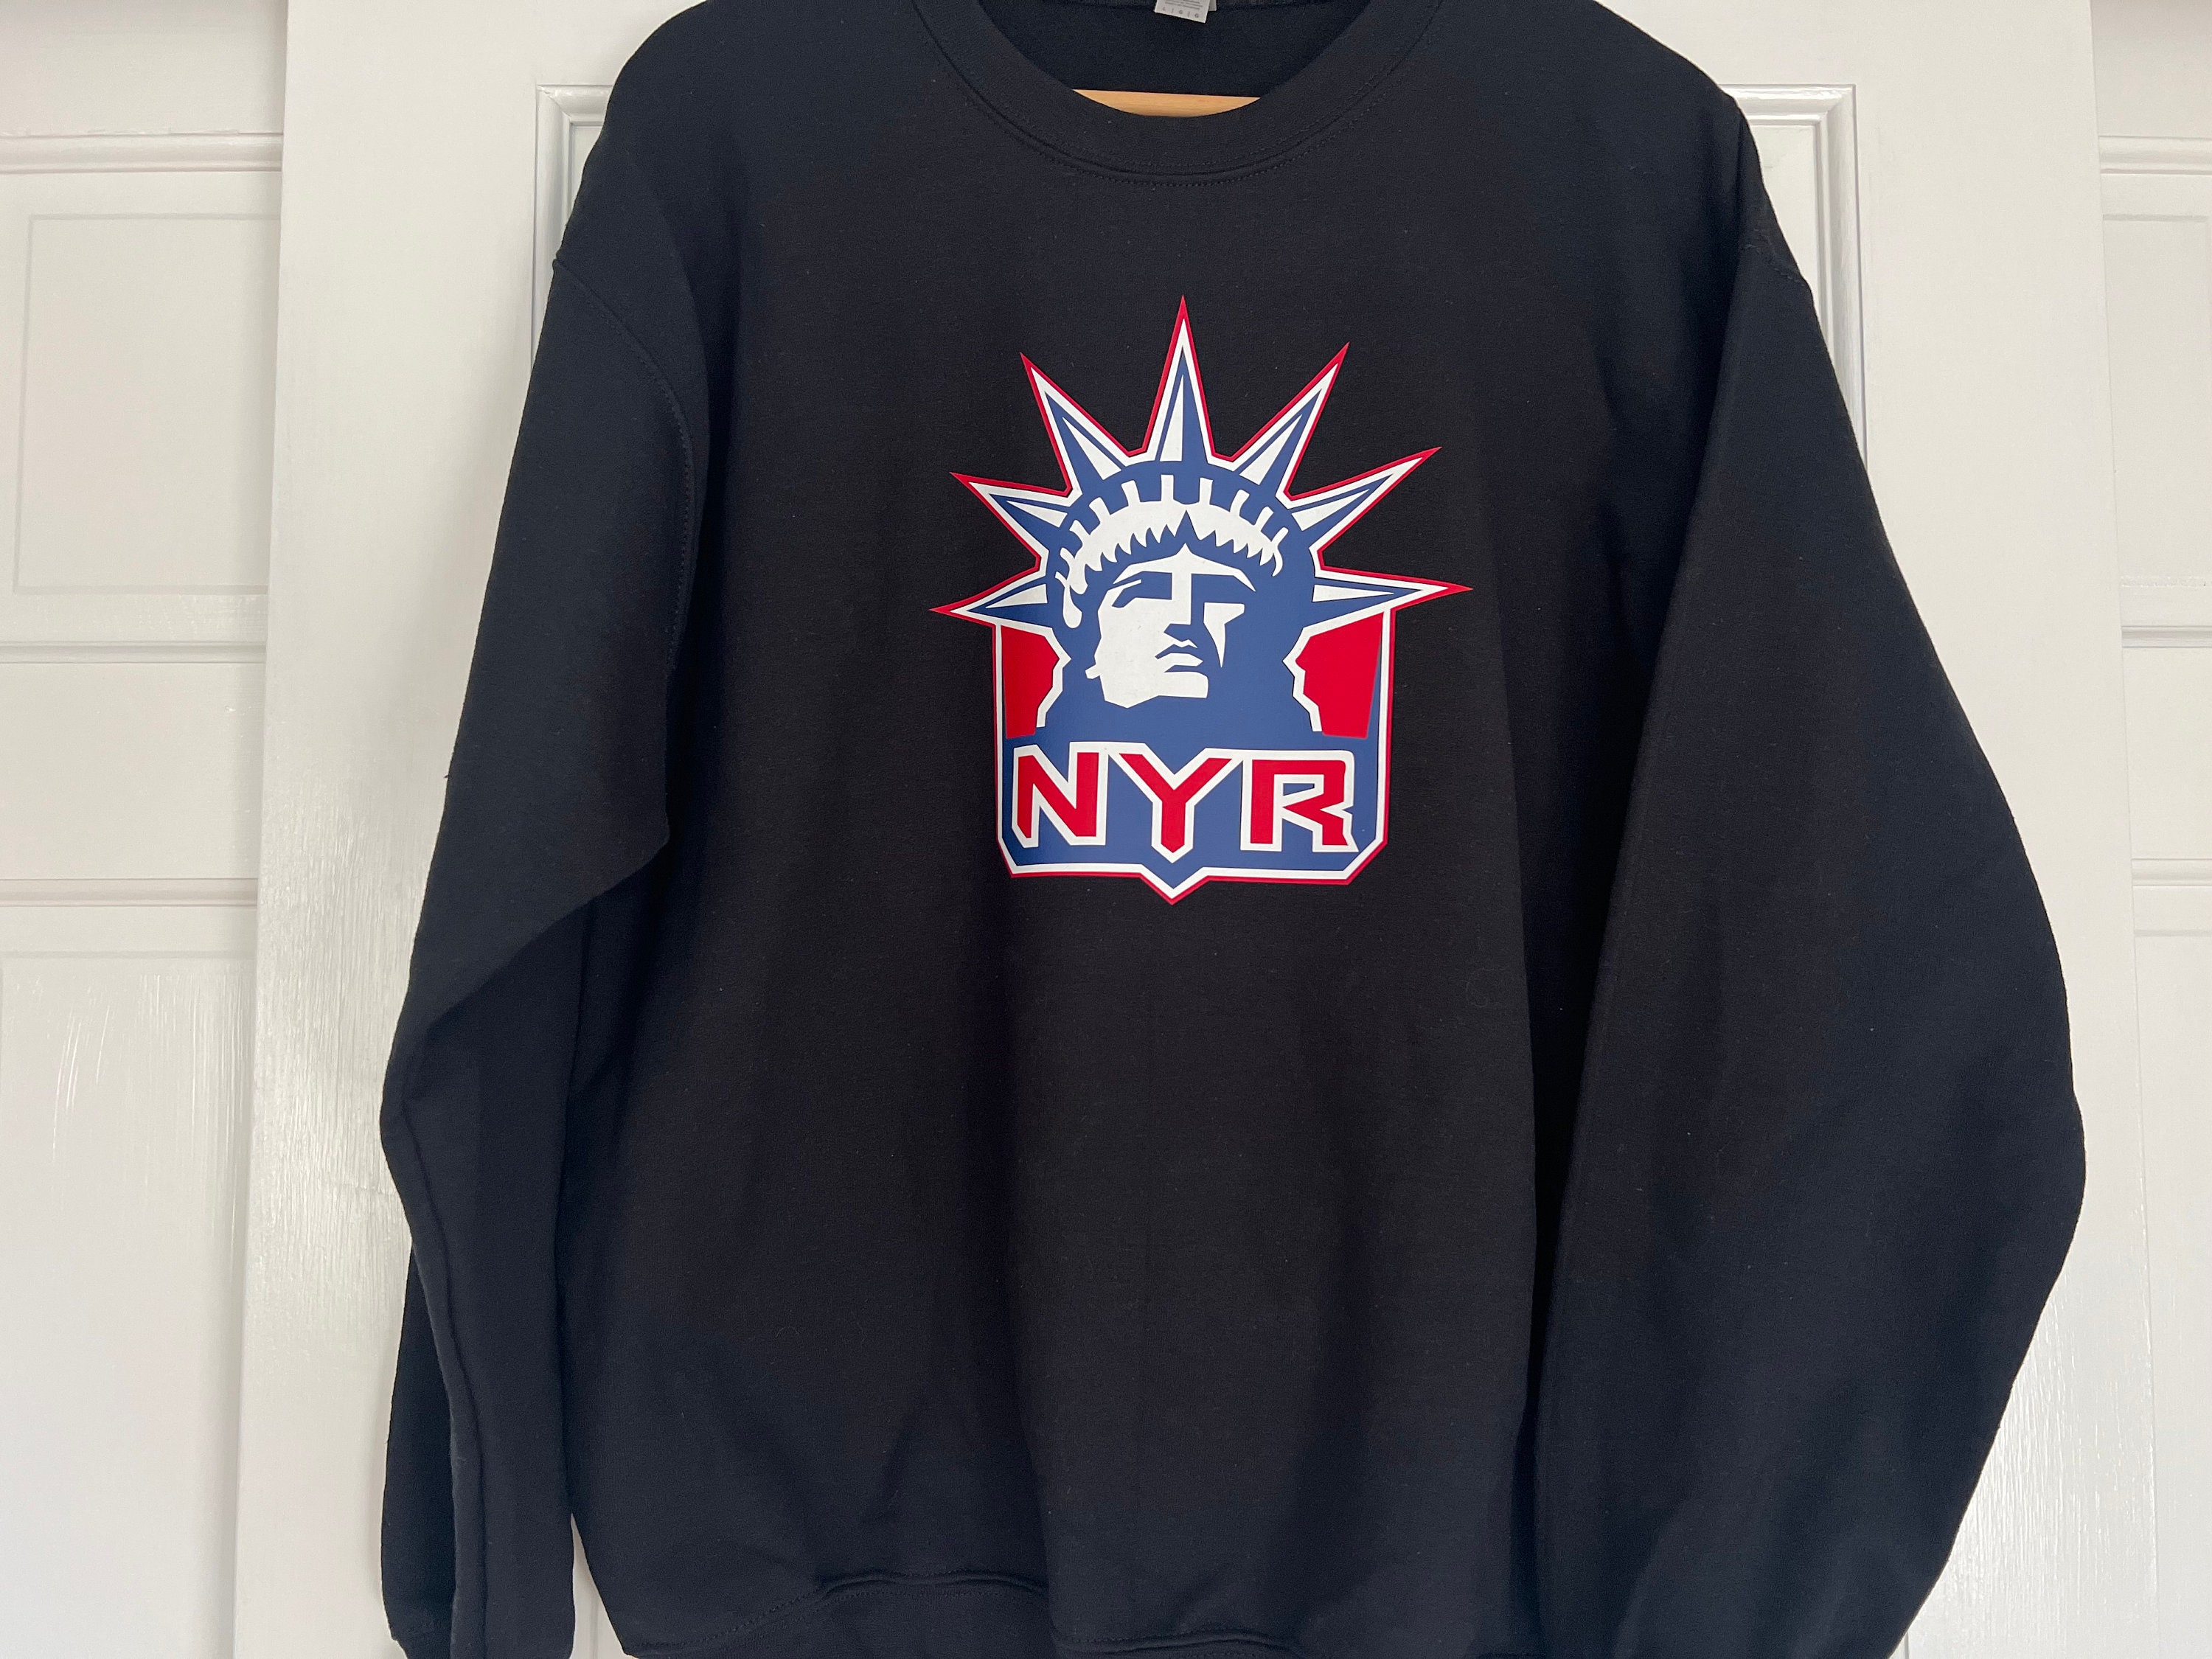 Nhl New York Rangers No Quit Team photo 2022 T-shirt, hoodie